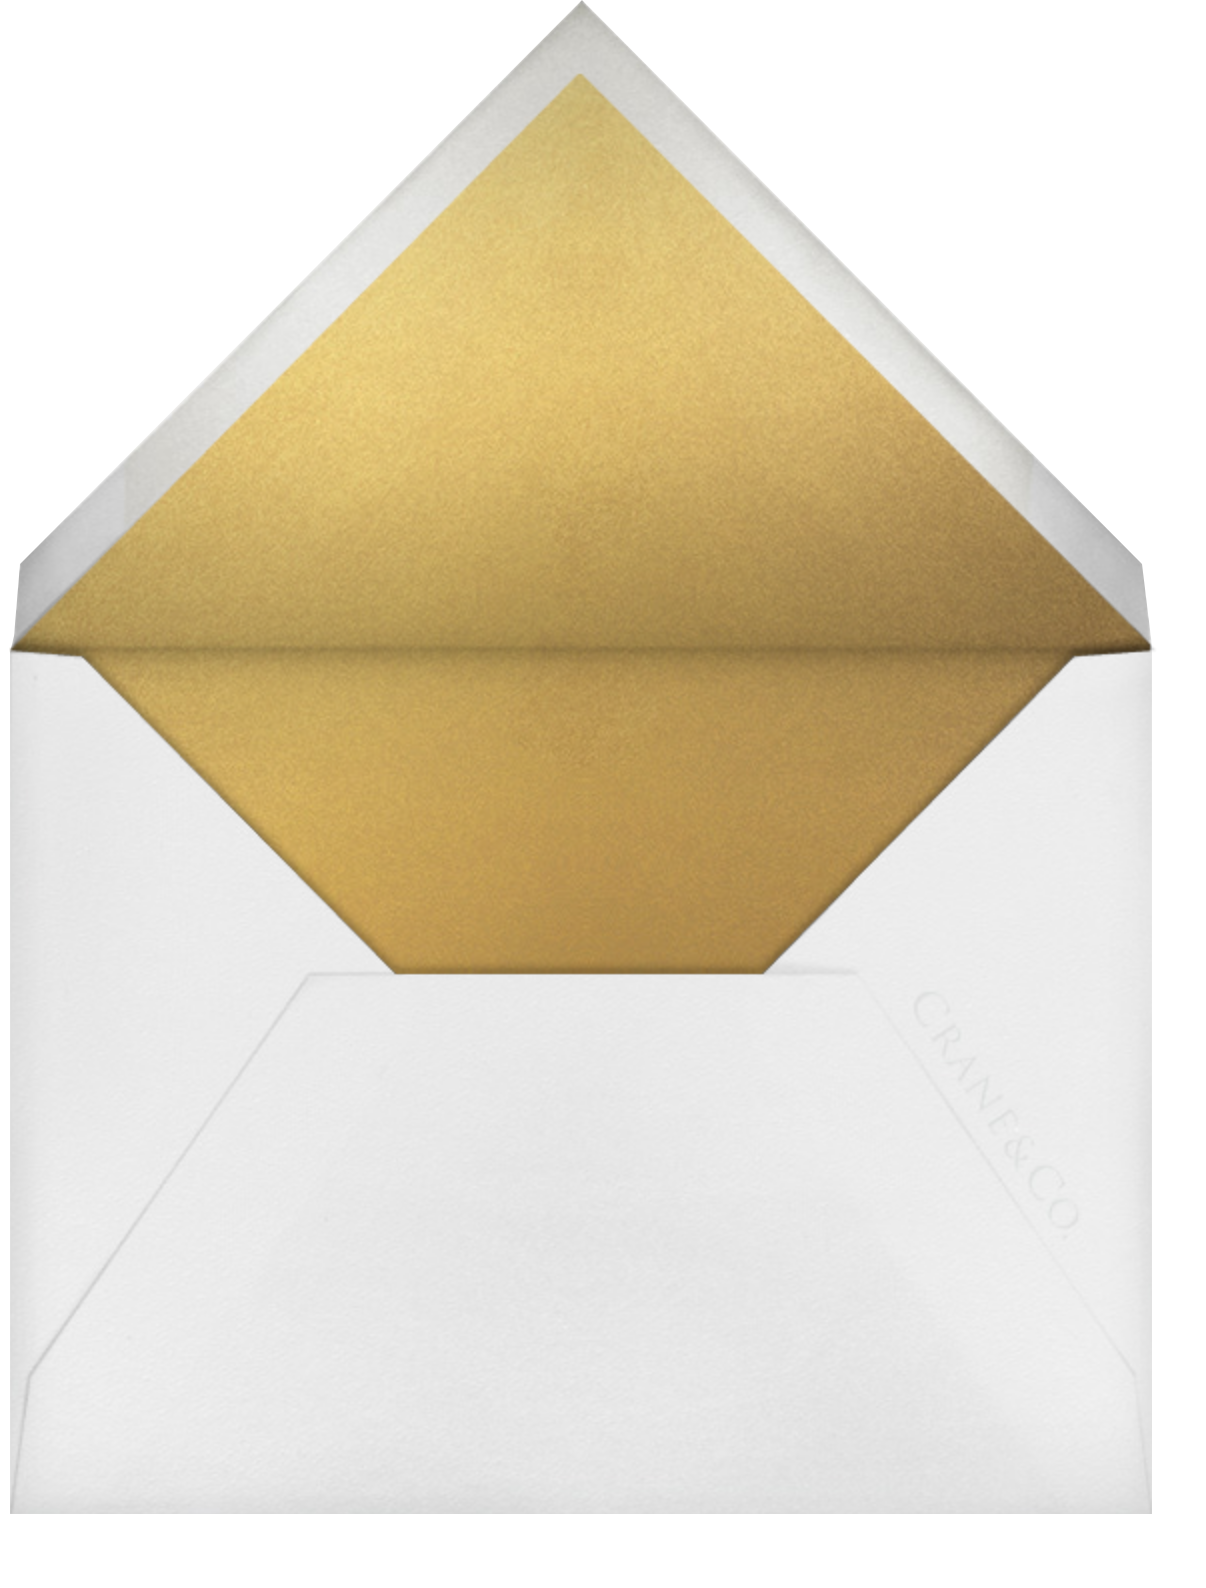 Alcazar (Save The Date) - Medium Gold - Crane & Co. - Envelope